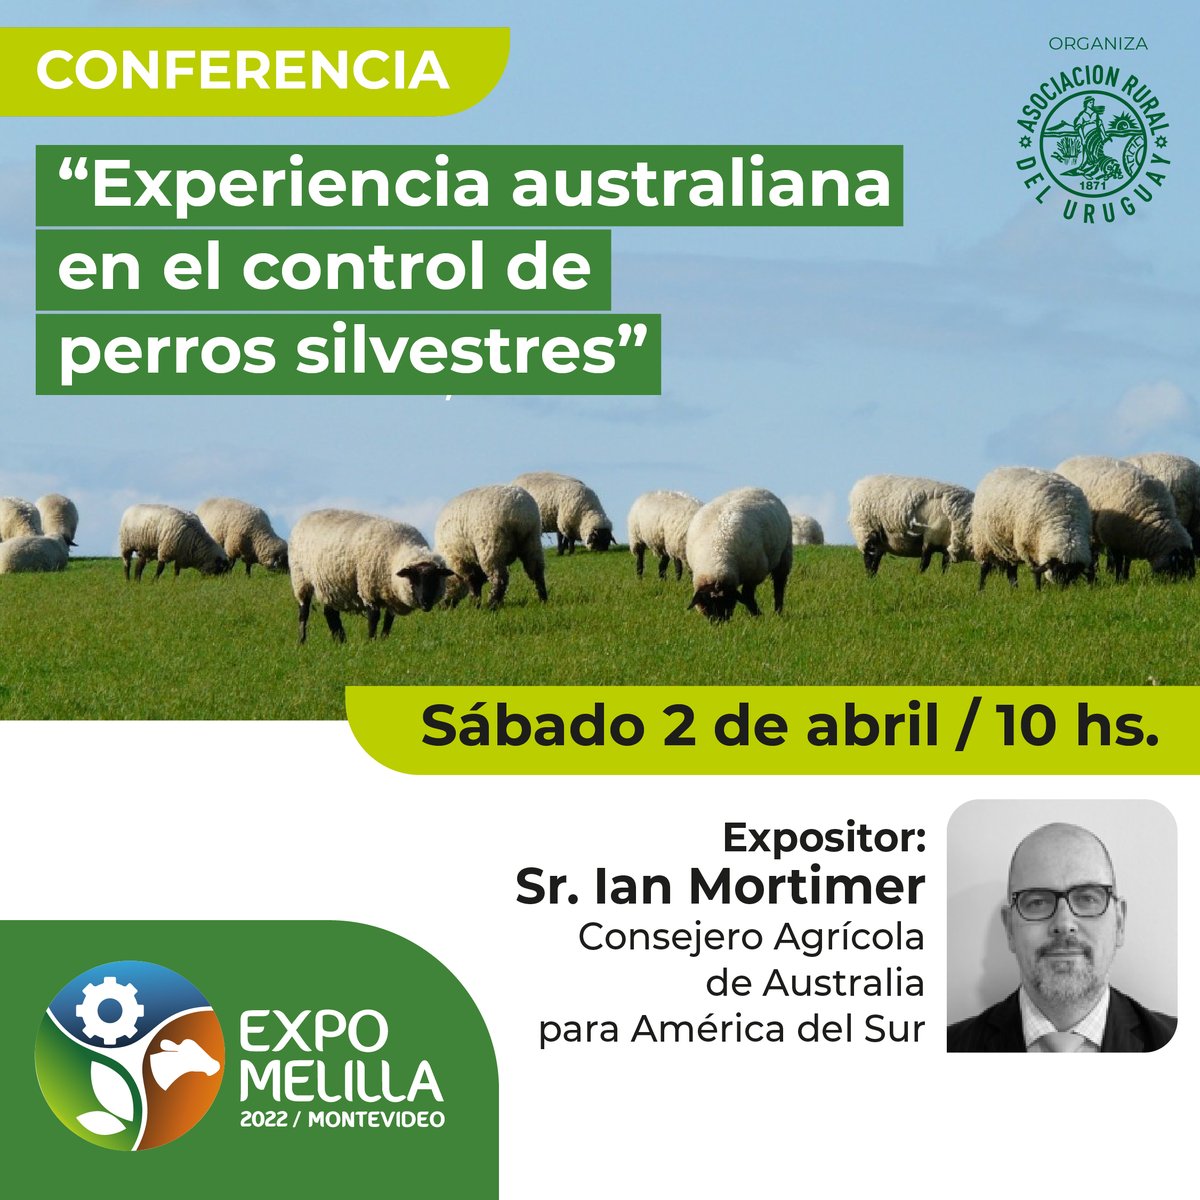 EXPO MELILLA 2022 CONFERENCIA ❞𝐄𝐱𝐩𝐞𝐫𝐢𝐞𝐧𝐜𝐢𝐚 𝐚𝐮𝐬𝐭𝐫𝐚𝐥𝐢𝐚𝐧𝐚 𝐞𝐧 𝐞𝐥 𝐜𝐨𝐧𝐭𝐫𝐨𝐥 𝐝𝐞 𝐩𝐞𝐫𝐫𝐨𝐬 𝐬𝐢𝐥𝐯𝐞𝐬𝐭𝐫𝐞𝐬❞ Exp: Sr. Ian Mortimer Con. Agr. de Australia para América del Sur 𝐒𝐚́𝐛𝐚𝐝𝐨 𝟐 𝐝𝐞 𝐚𝐛𝐫𝐢𝐥 / 𝟏𝟎 𝐡𝐬 expomelilla.com.uy